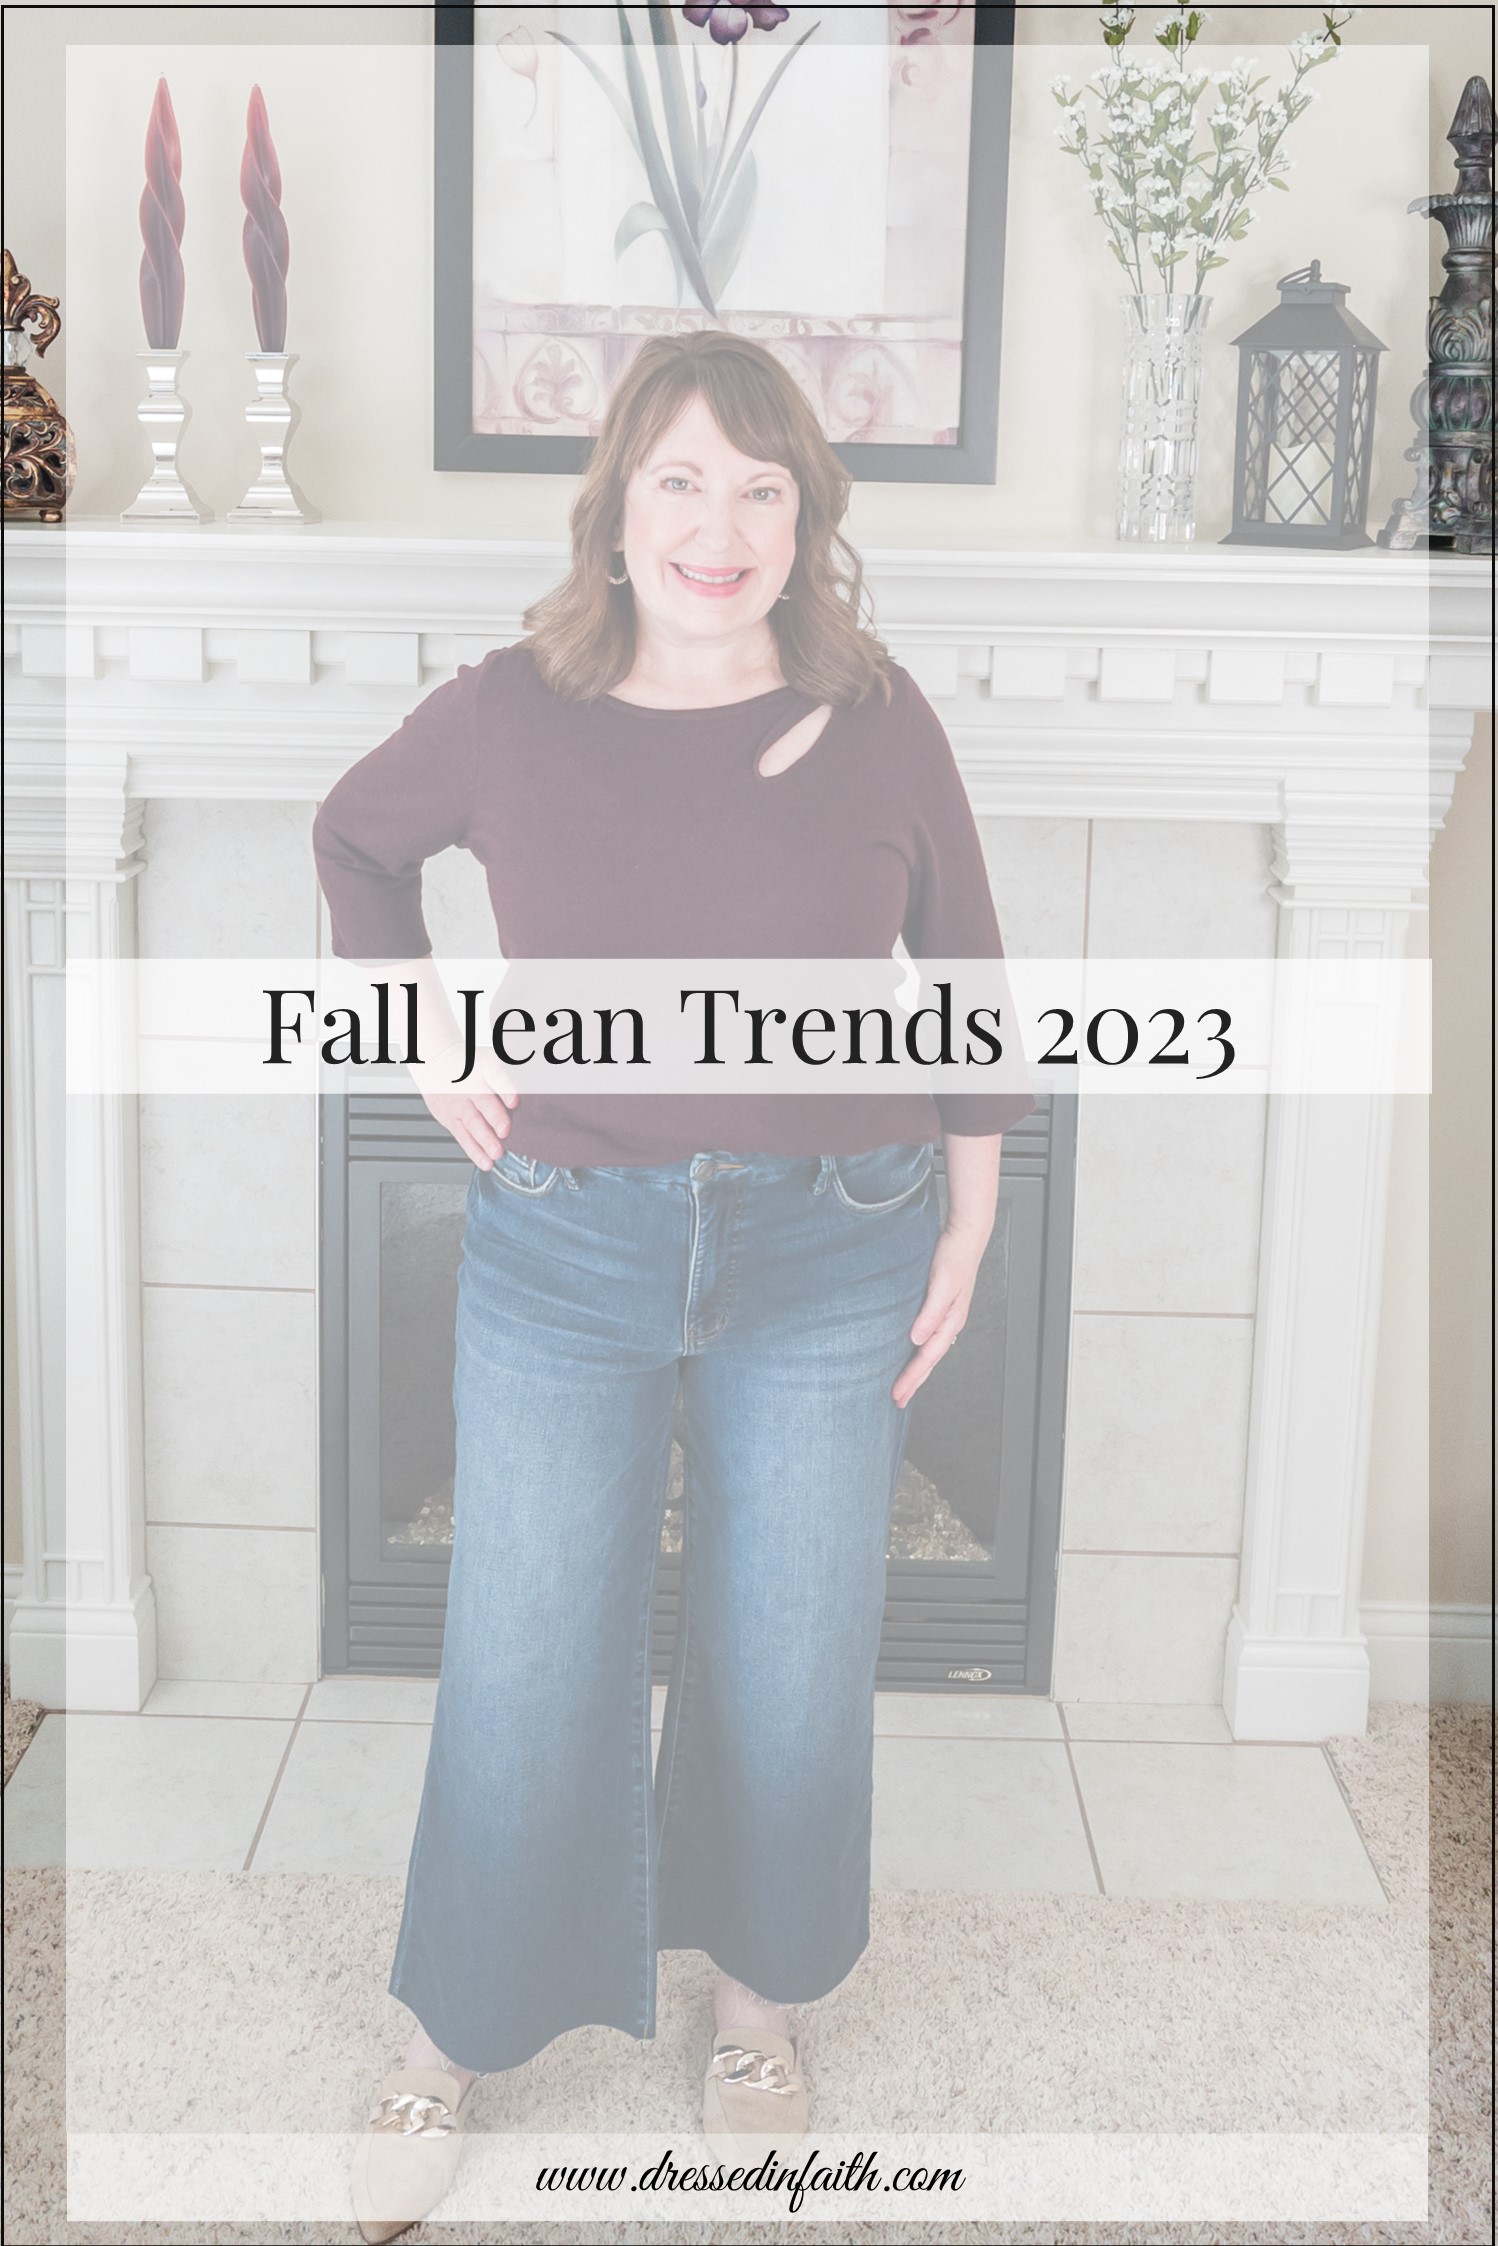 Fall Jean Trends 2023